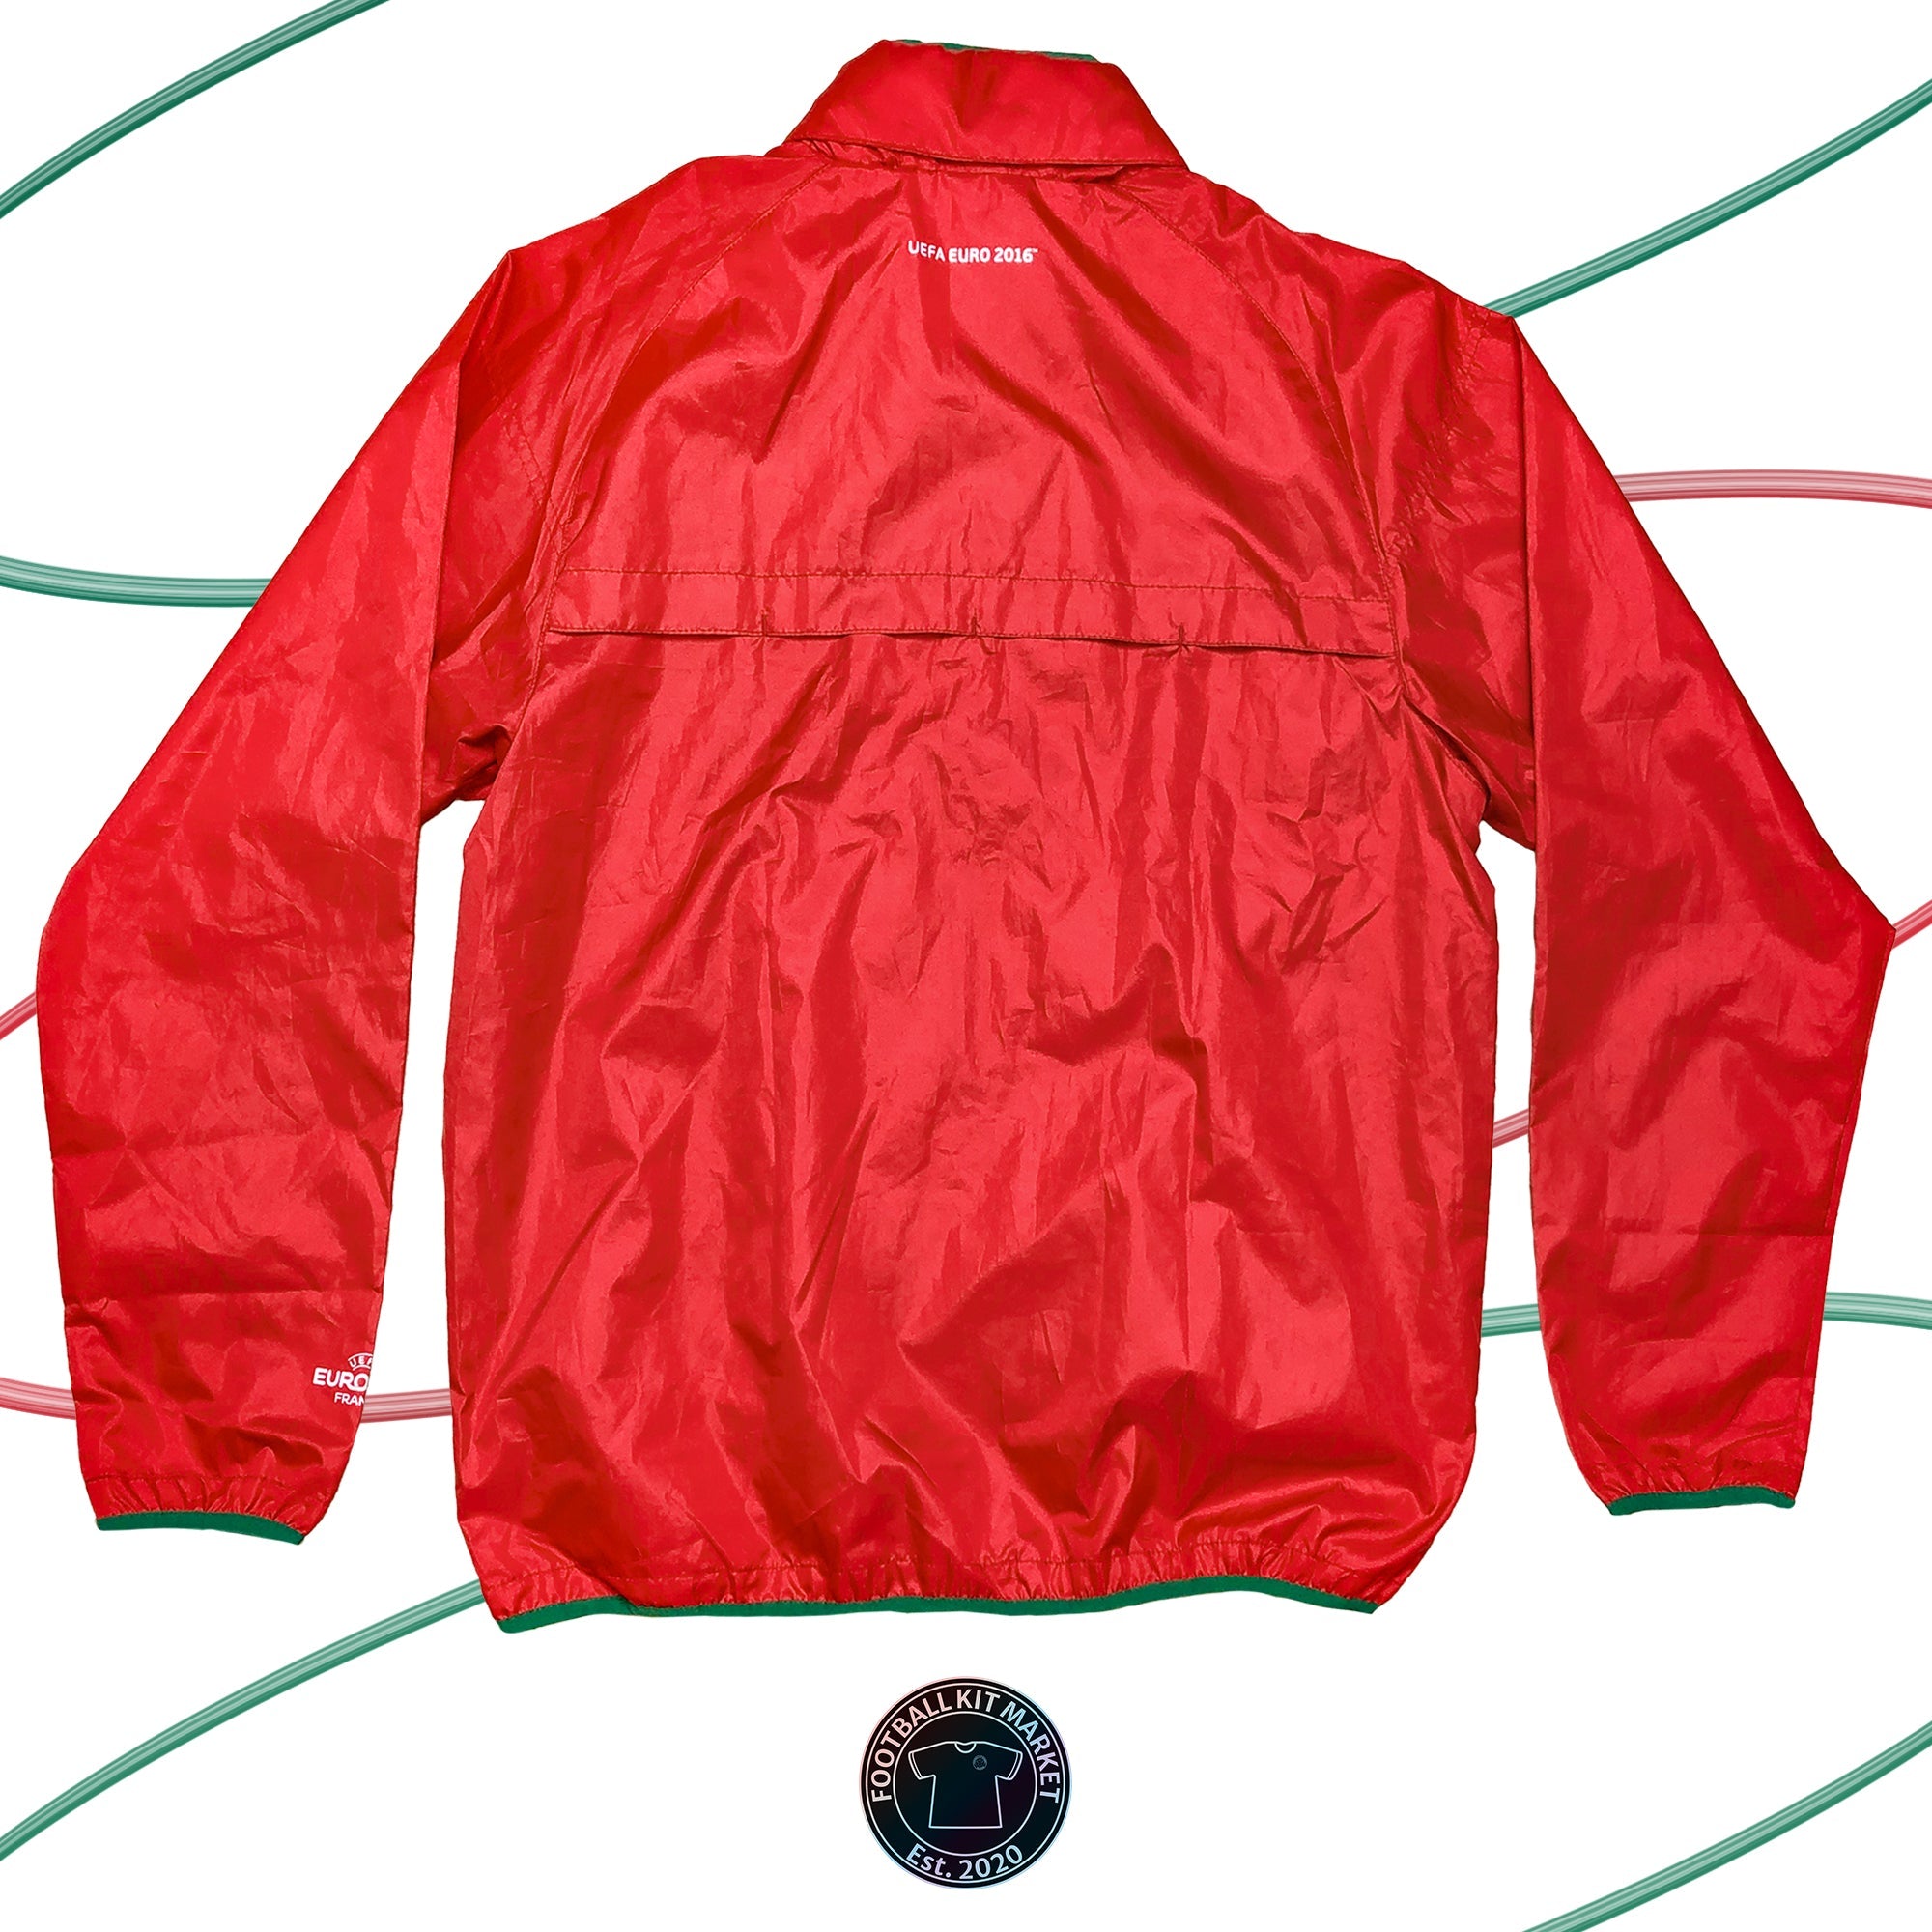 Genuine WALES Jacket (2016) - UEFA EURO 2016 (L) - Product Image from Football Kit Market